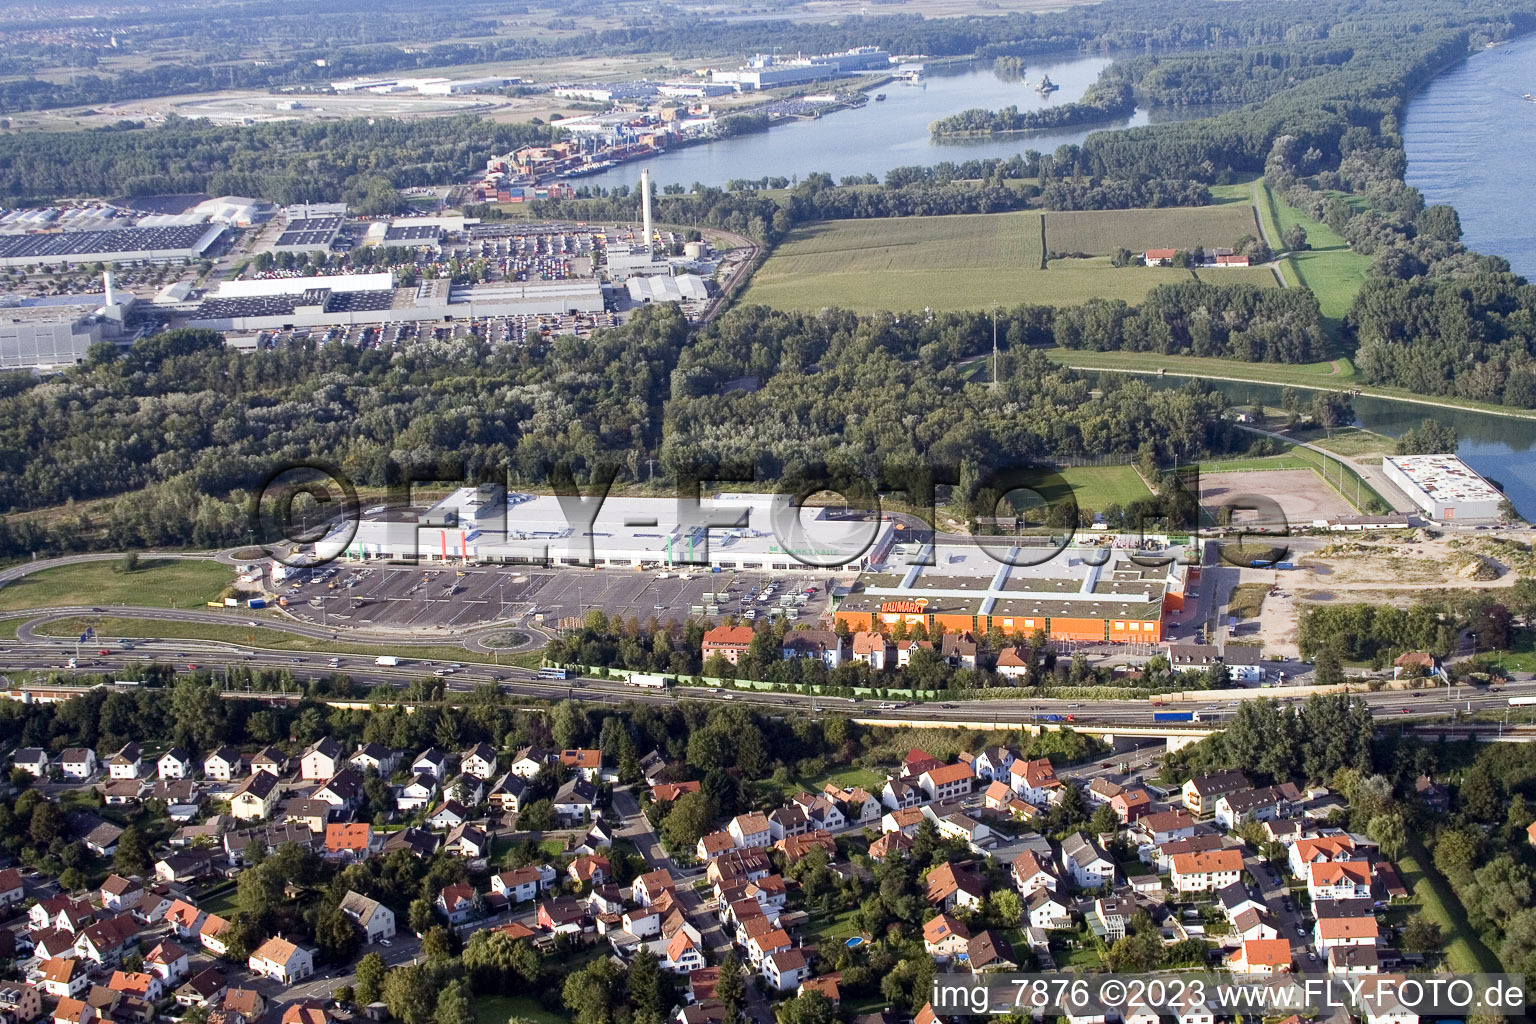 Retail center in the district Maximiliansau in Wörth am Rhein in the state Rhineland-Palatinate, Germany